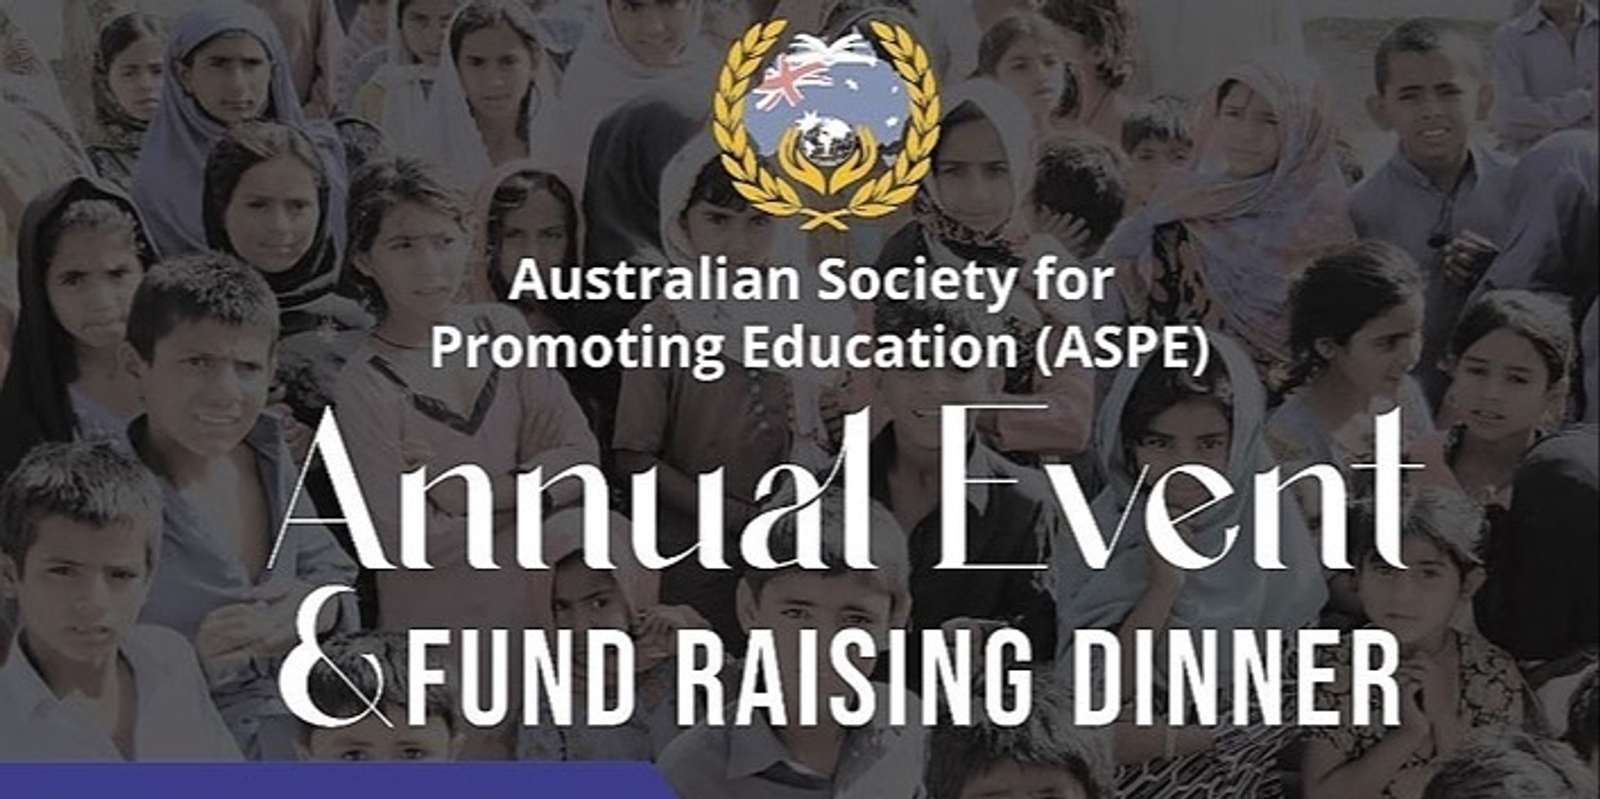 Banner image for ASPE- Annual Event & Fund Raising Dinner